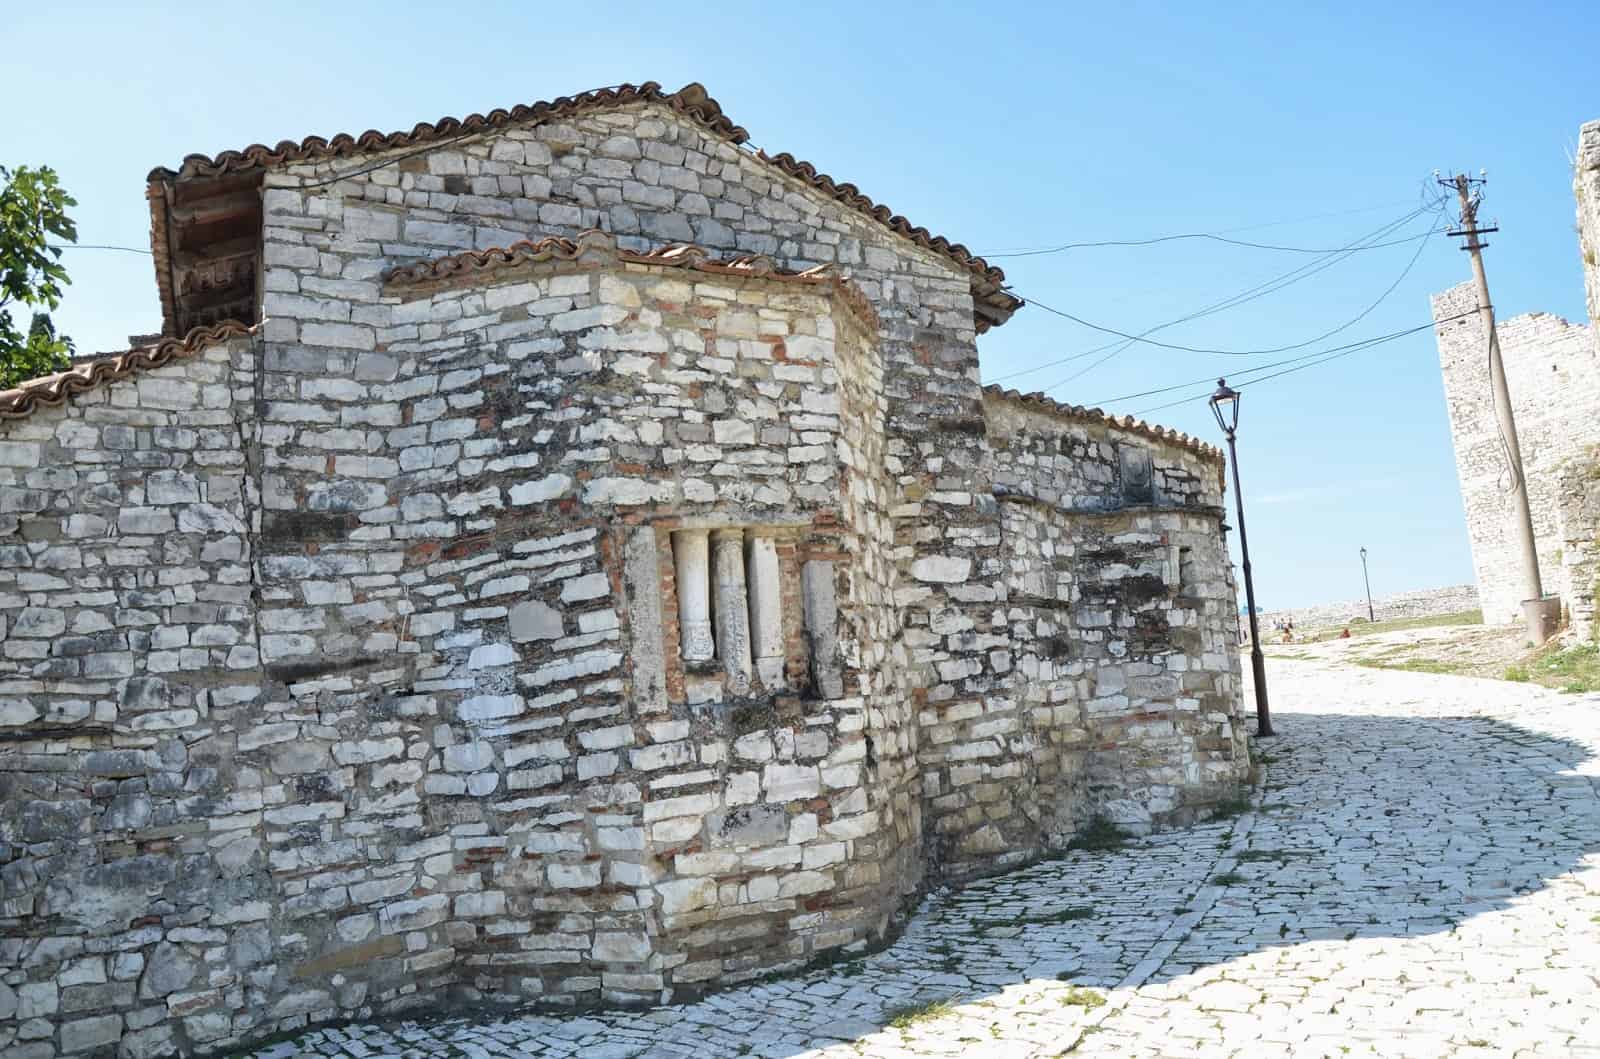 Church of St. Theodore in Berat, Albania